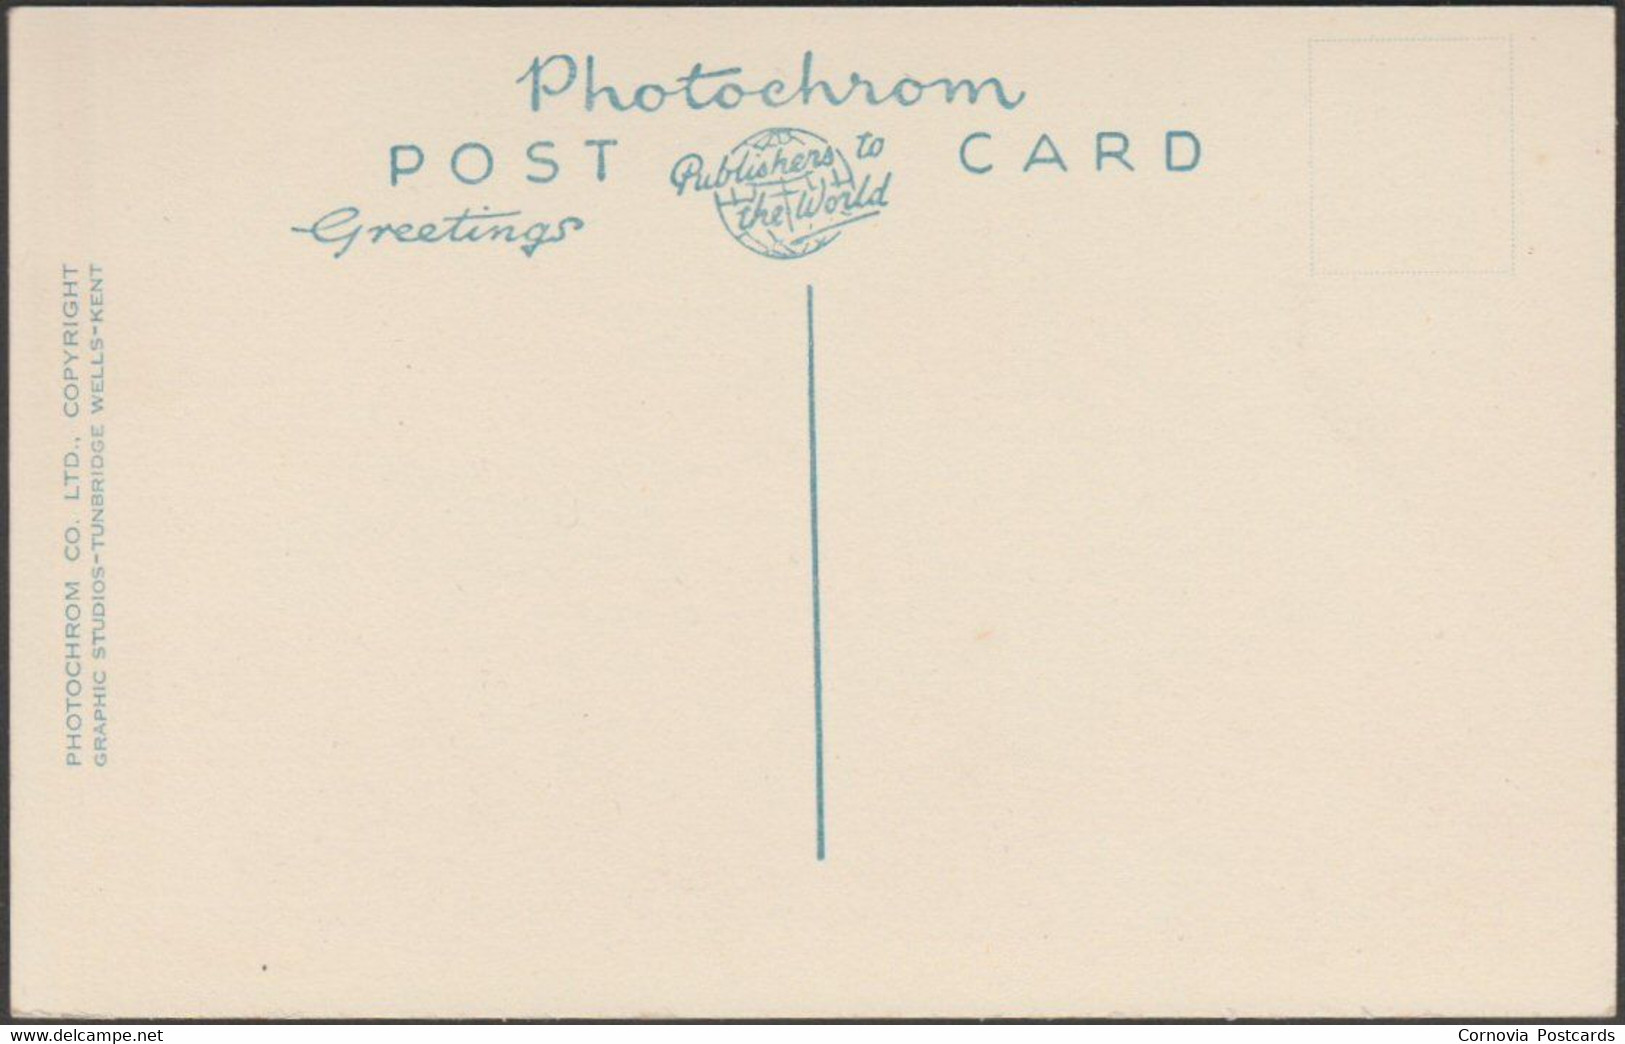 Greetings From Ilfracombe, Devon, C.1940s - Photochrom Postcard - Ilfracombe